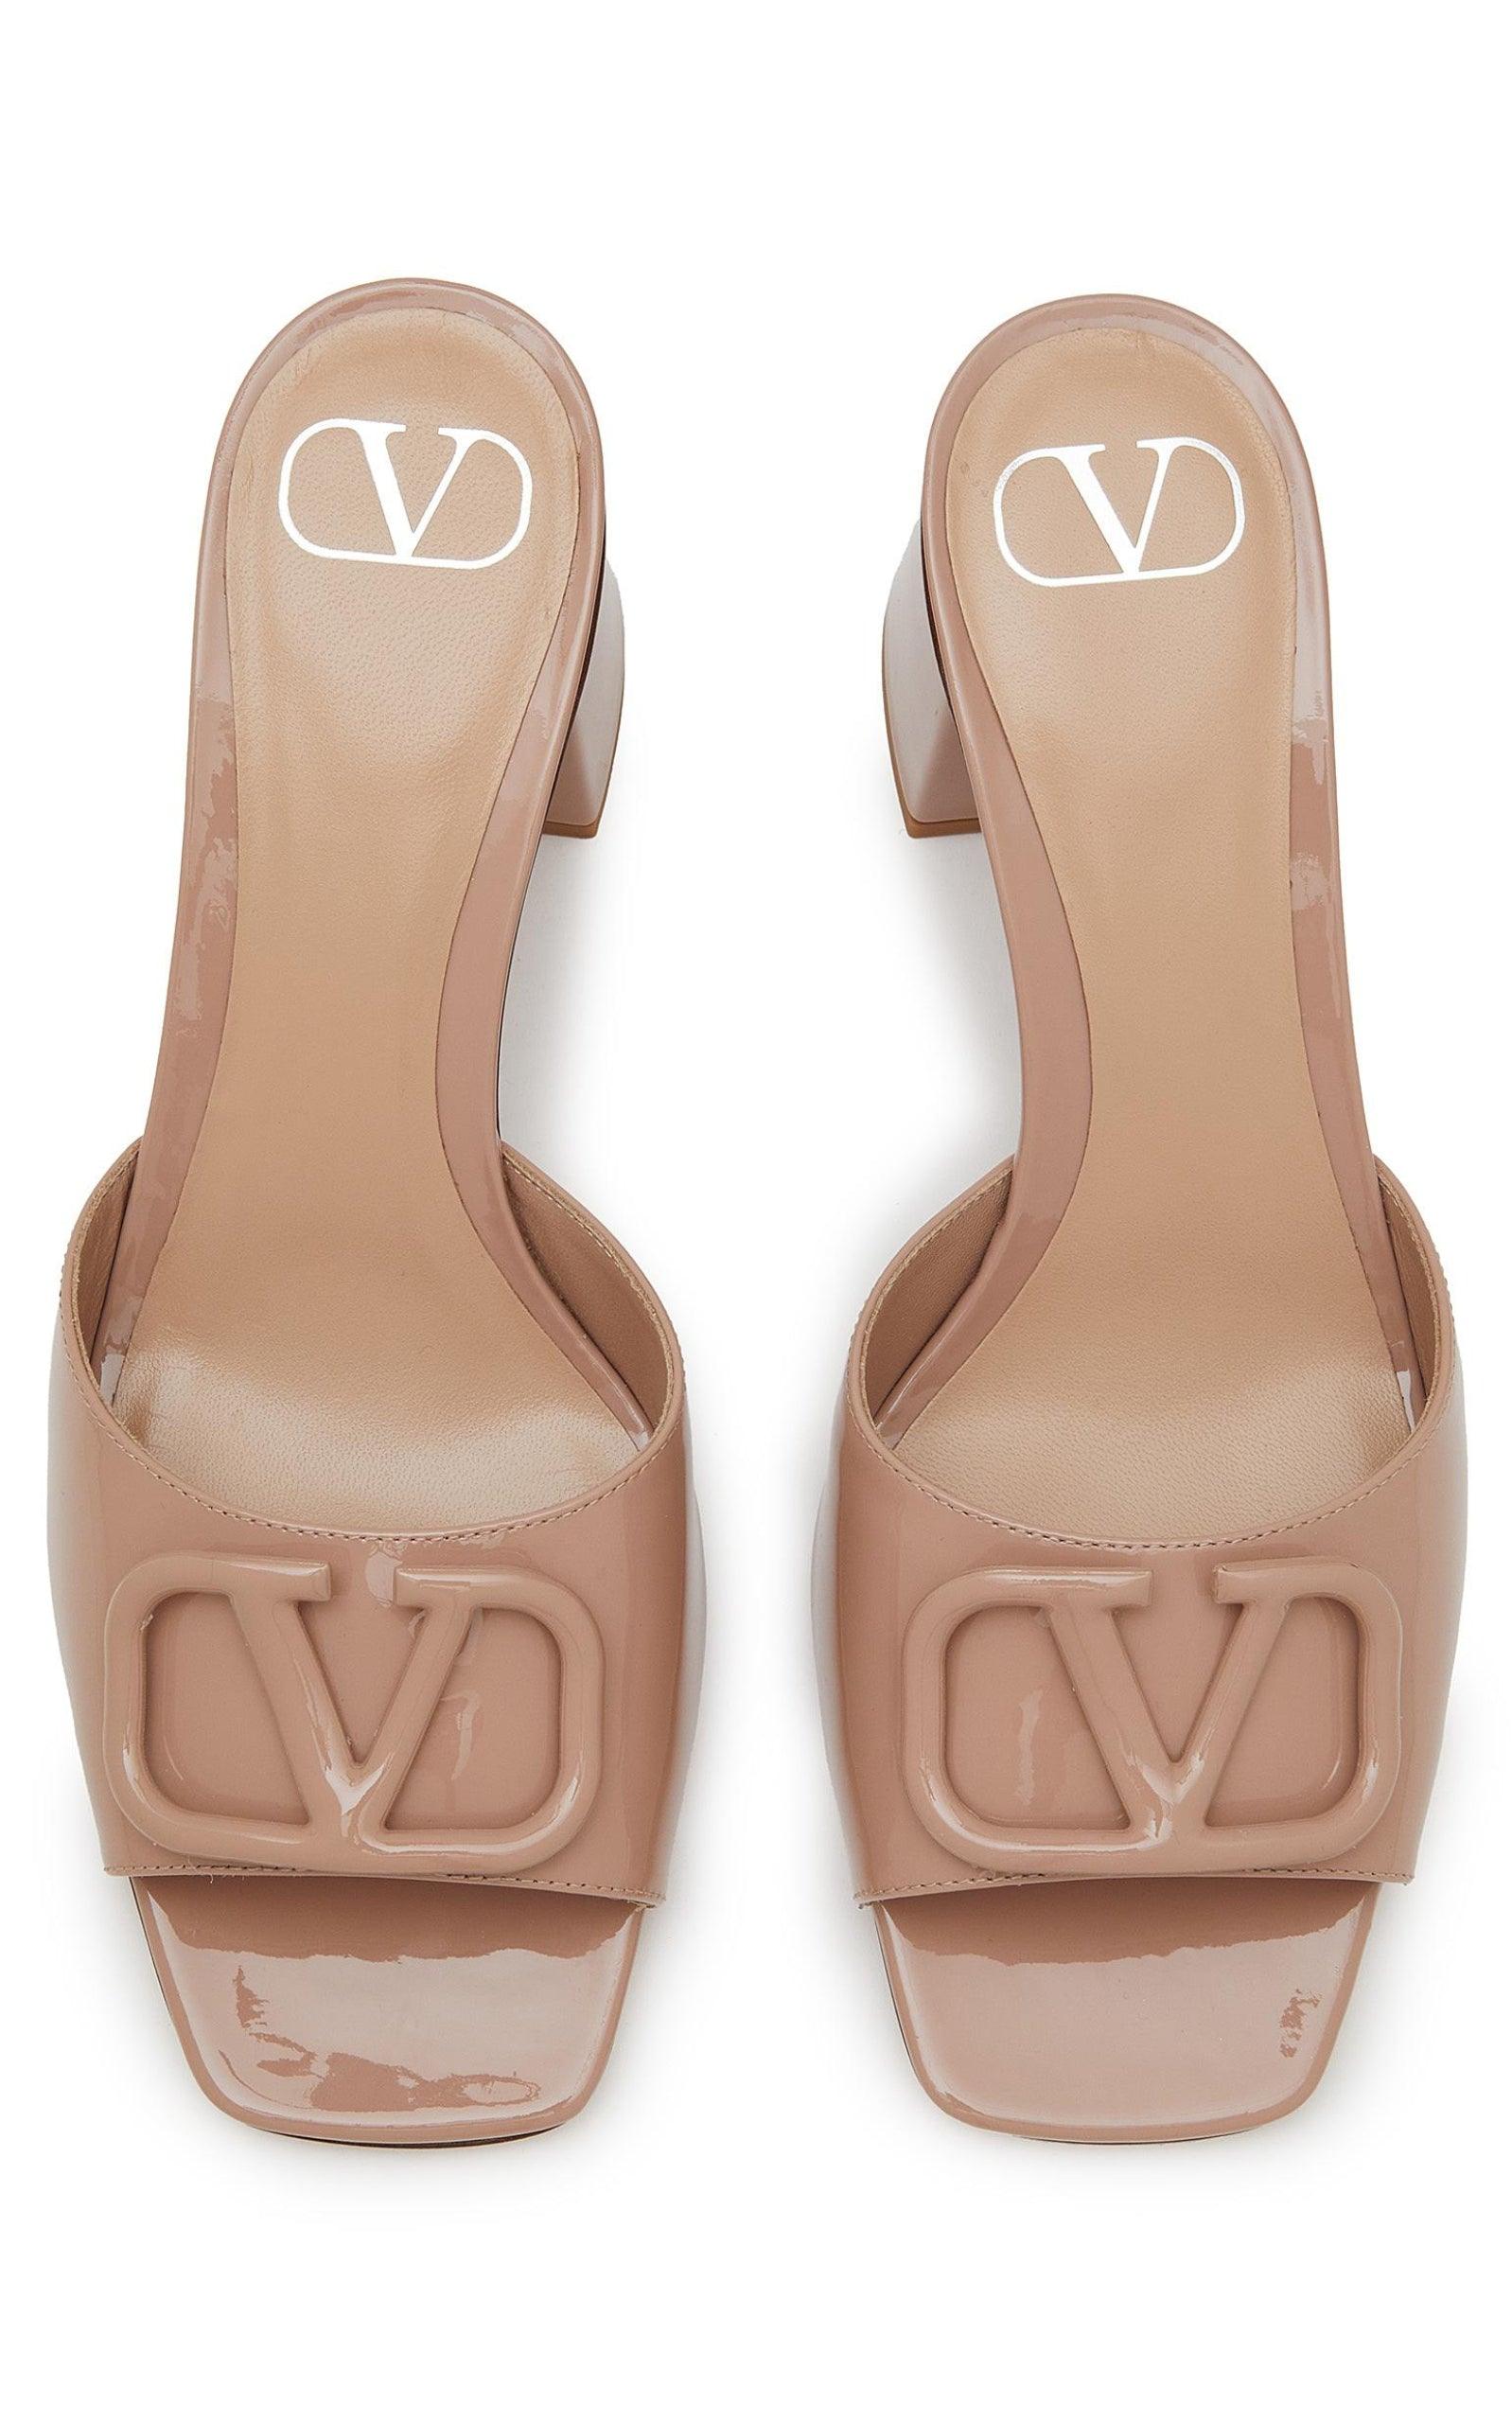 VLogo Signature metallic leather wedge sandals